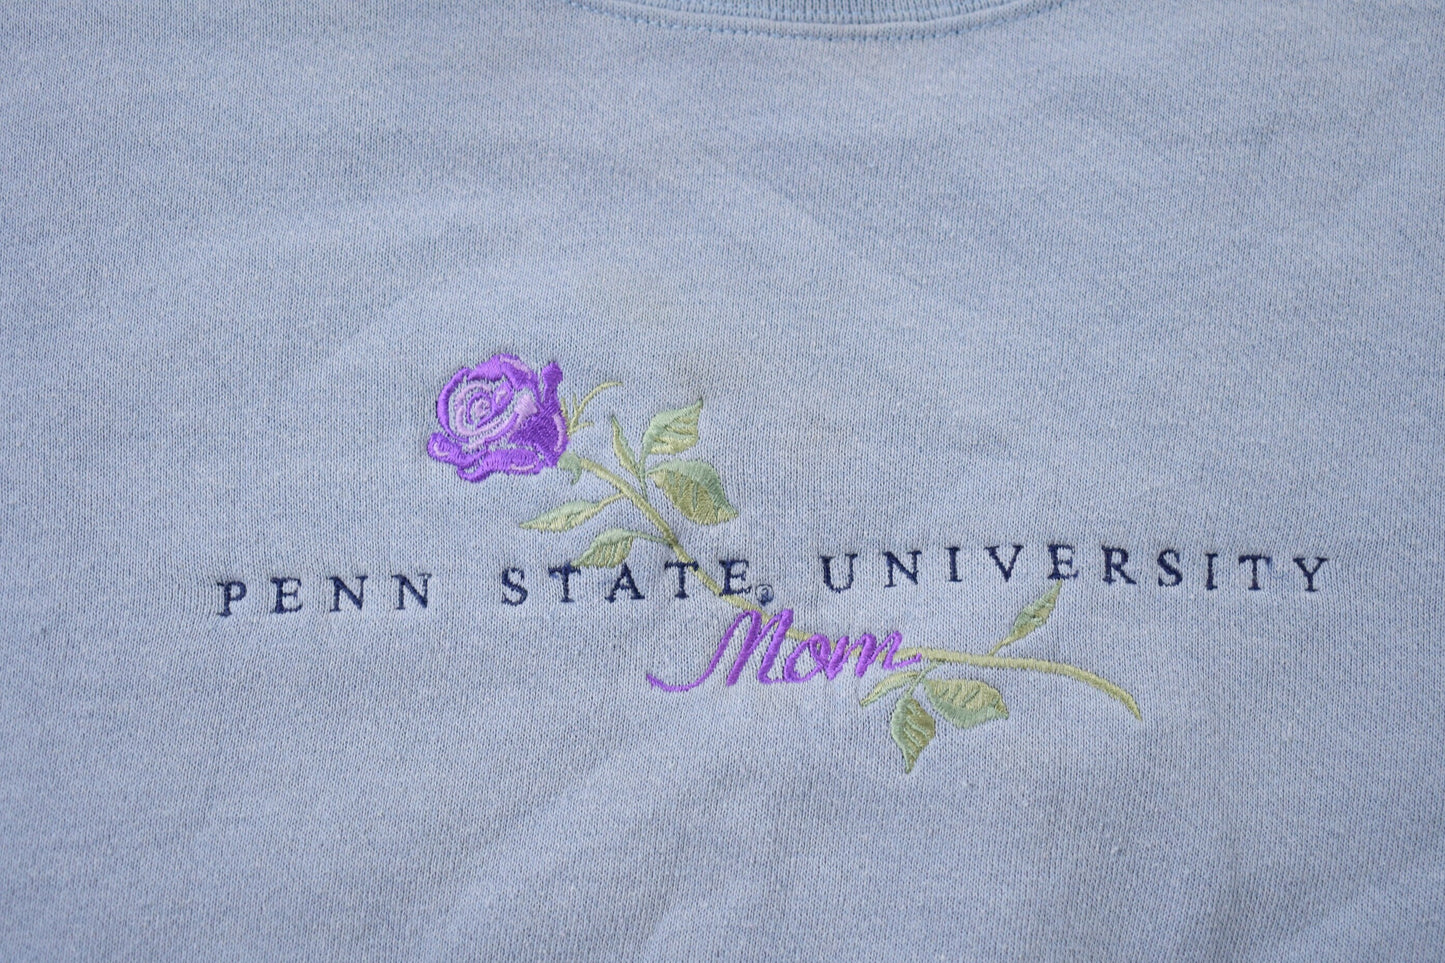 Vintage 1990s Jansport University of Penn State Collegiate Crewneck / Embroidered / NCAA Sweatshirt / Sportswear / Americana / Floral Print